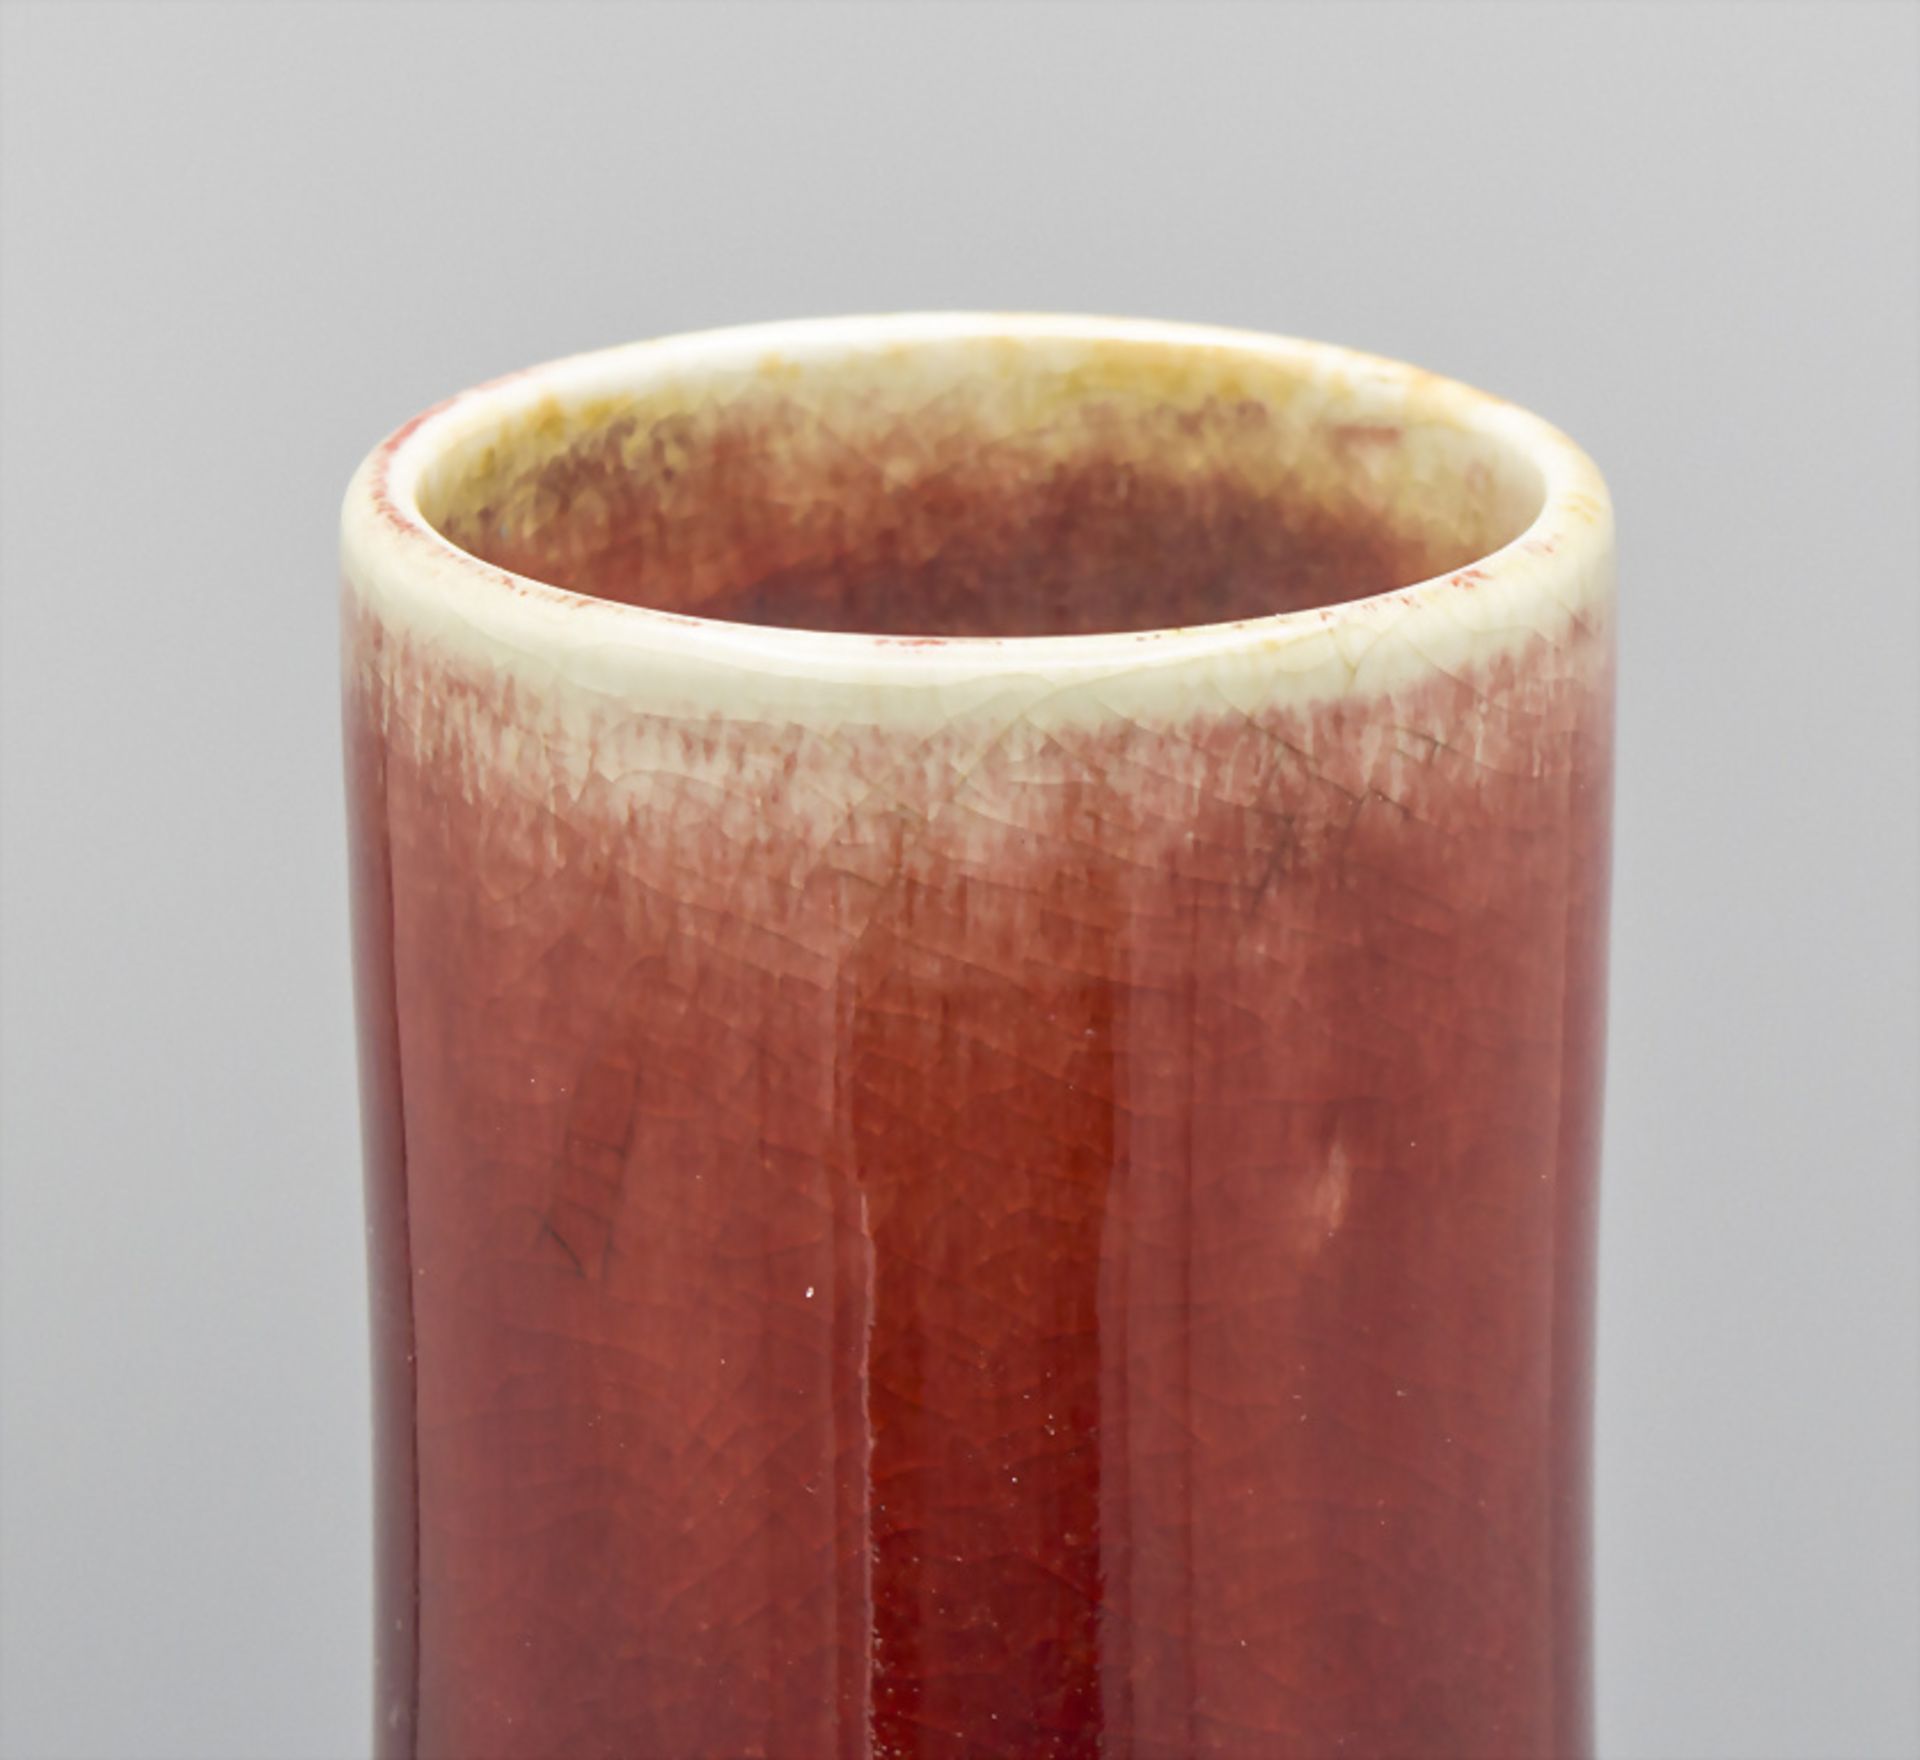 Ochsenblutvase / An ox blood vase / Sang de boeuf vase, China, 18.-19. Jh. - Bild 3 aus 4